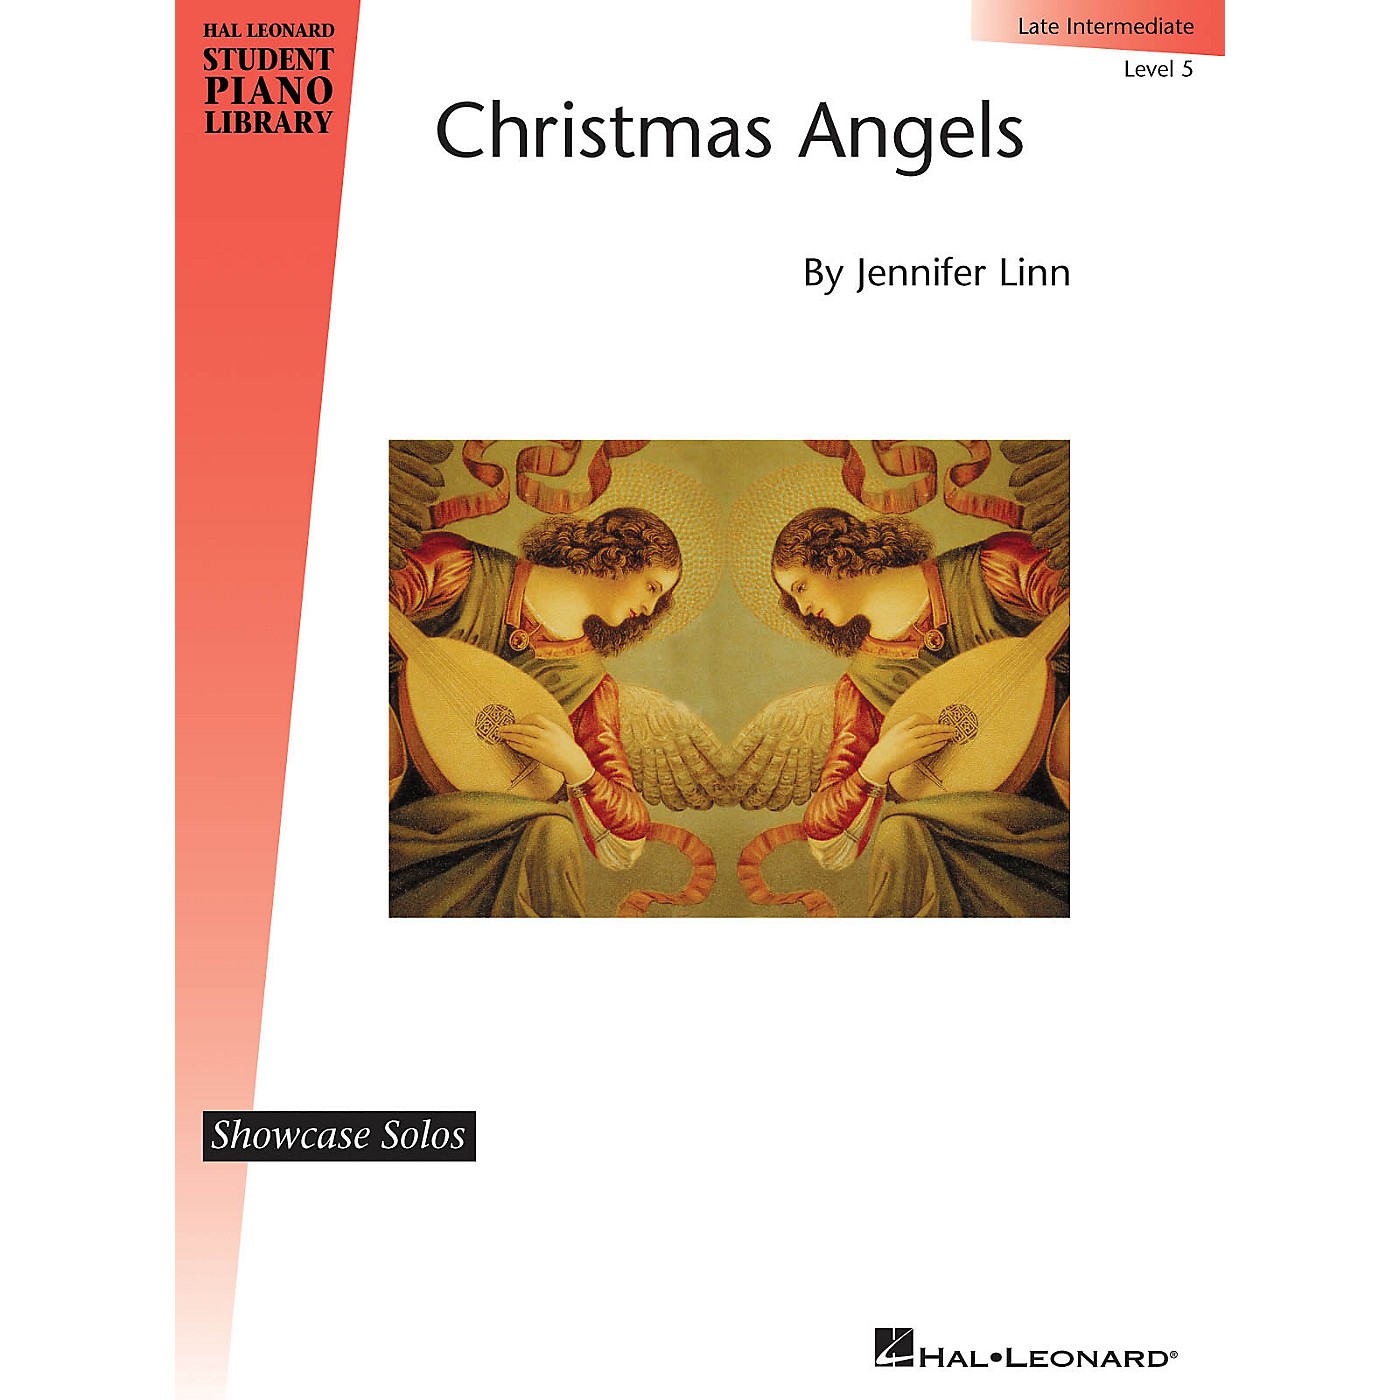 Hal Leonard Christmas Angels Piano Library Series by Jennifer Linn (Level Inter) thumbnail